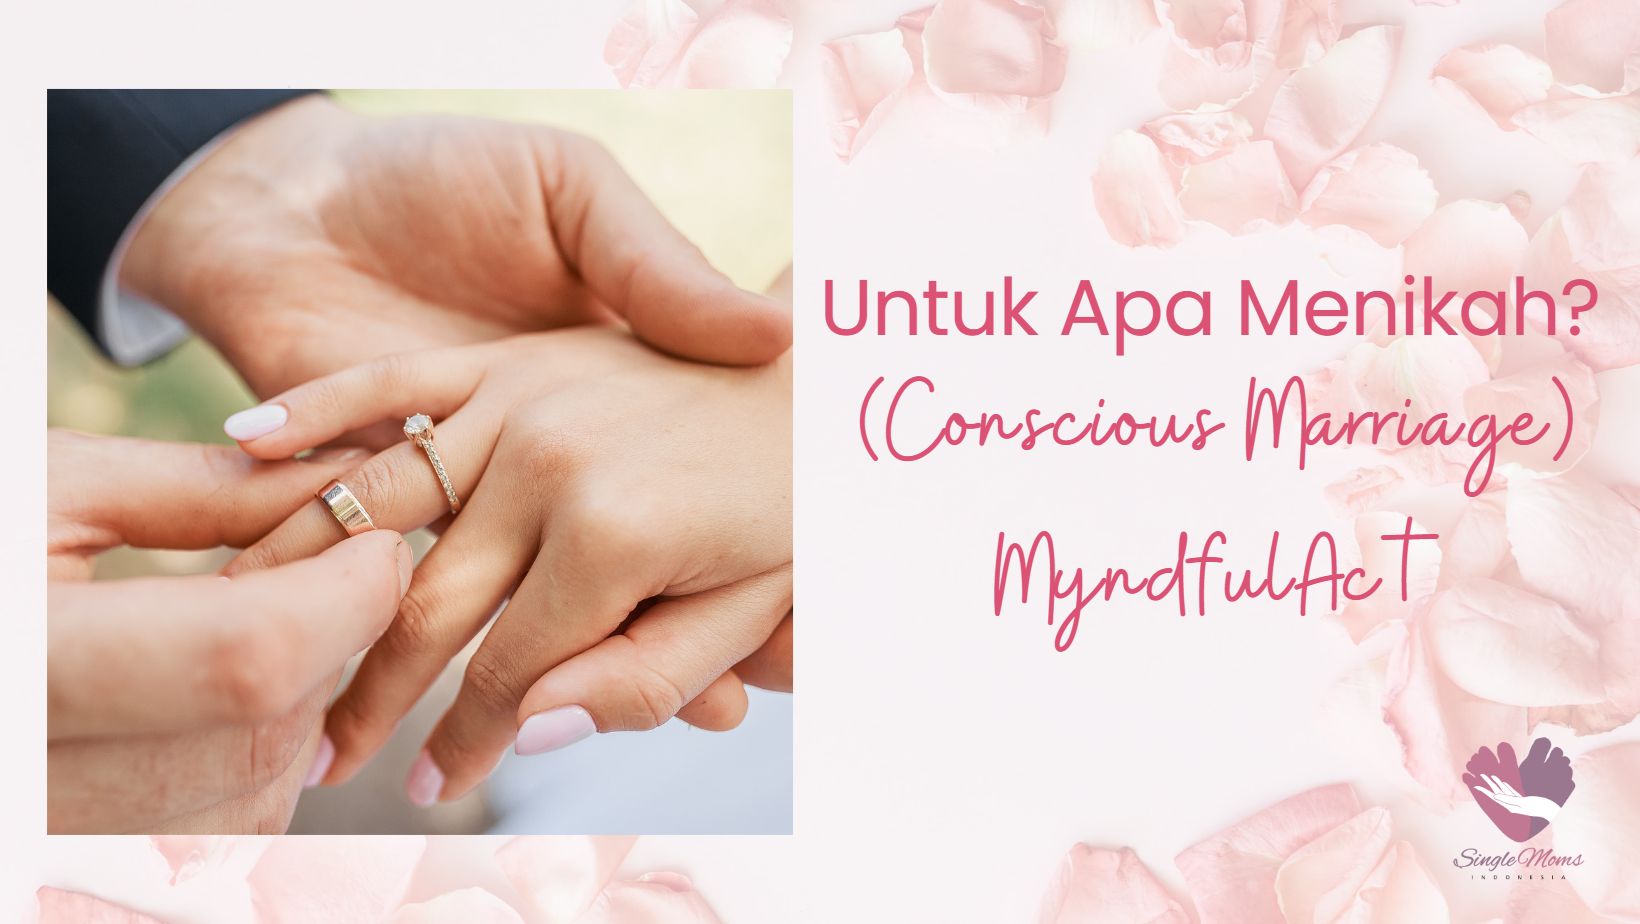 Untuk Apa Menikah? (Conscious Marriage) - MyndfulAct